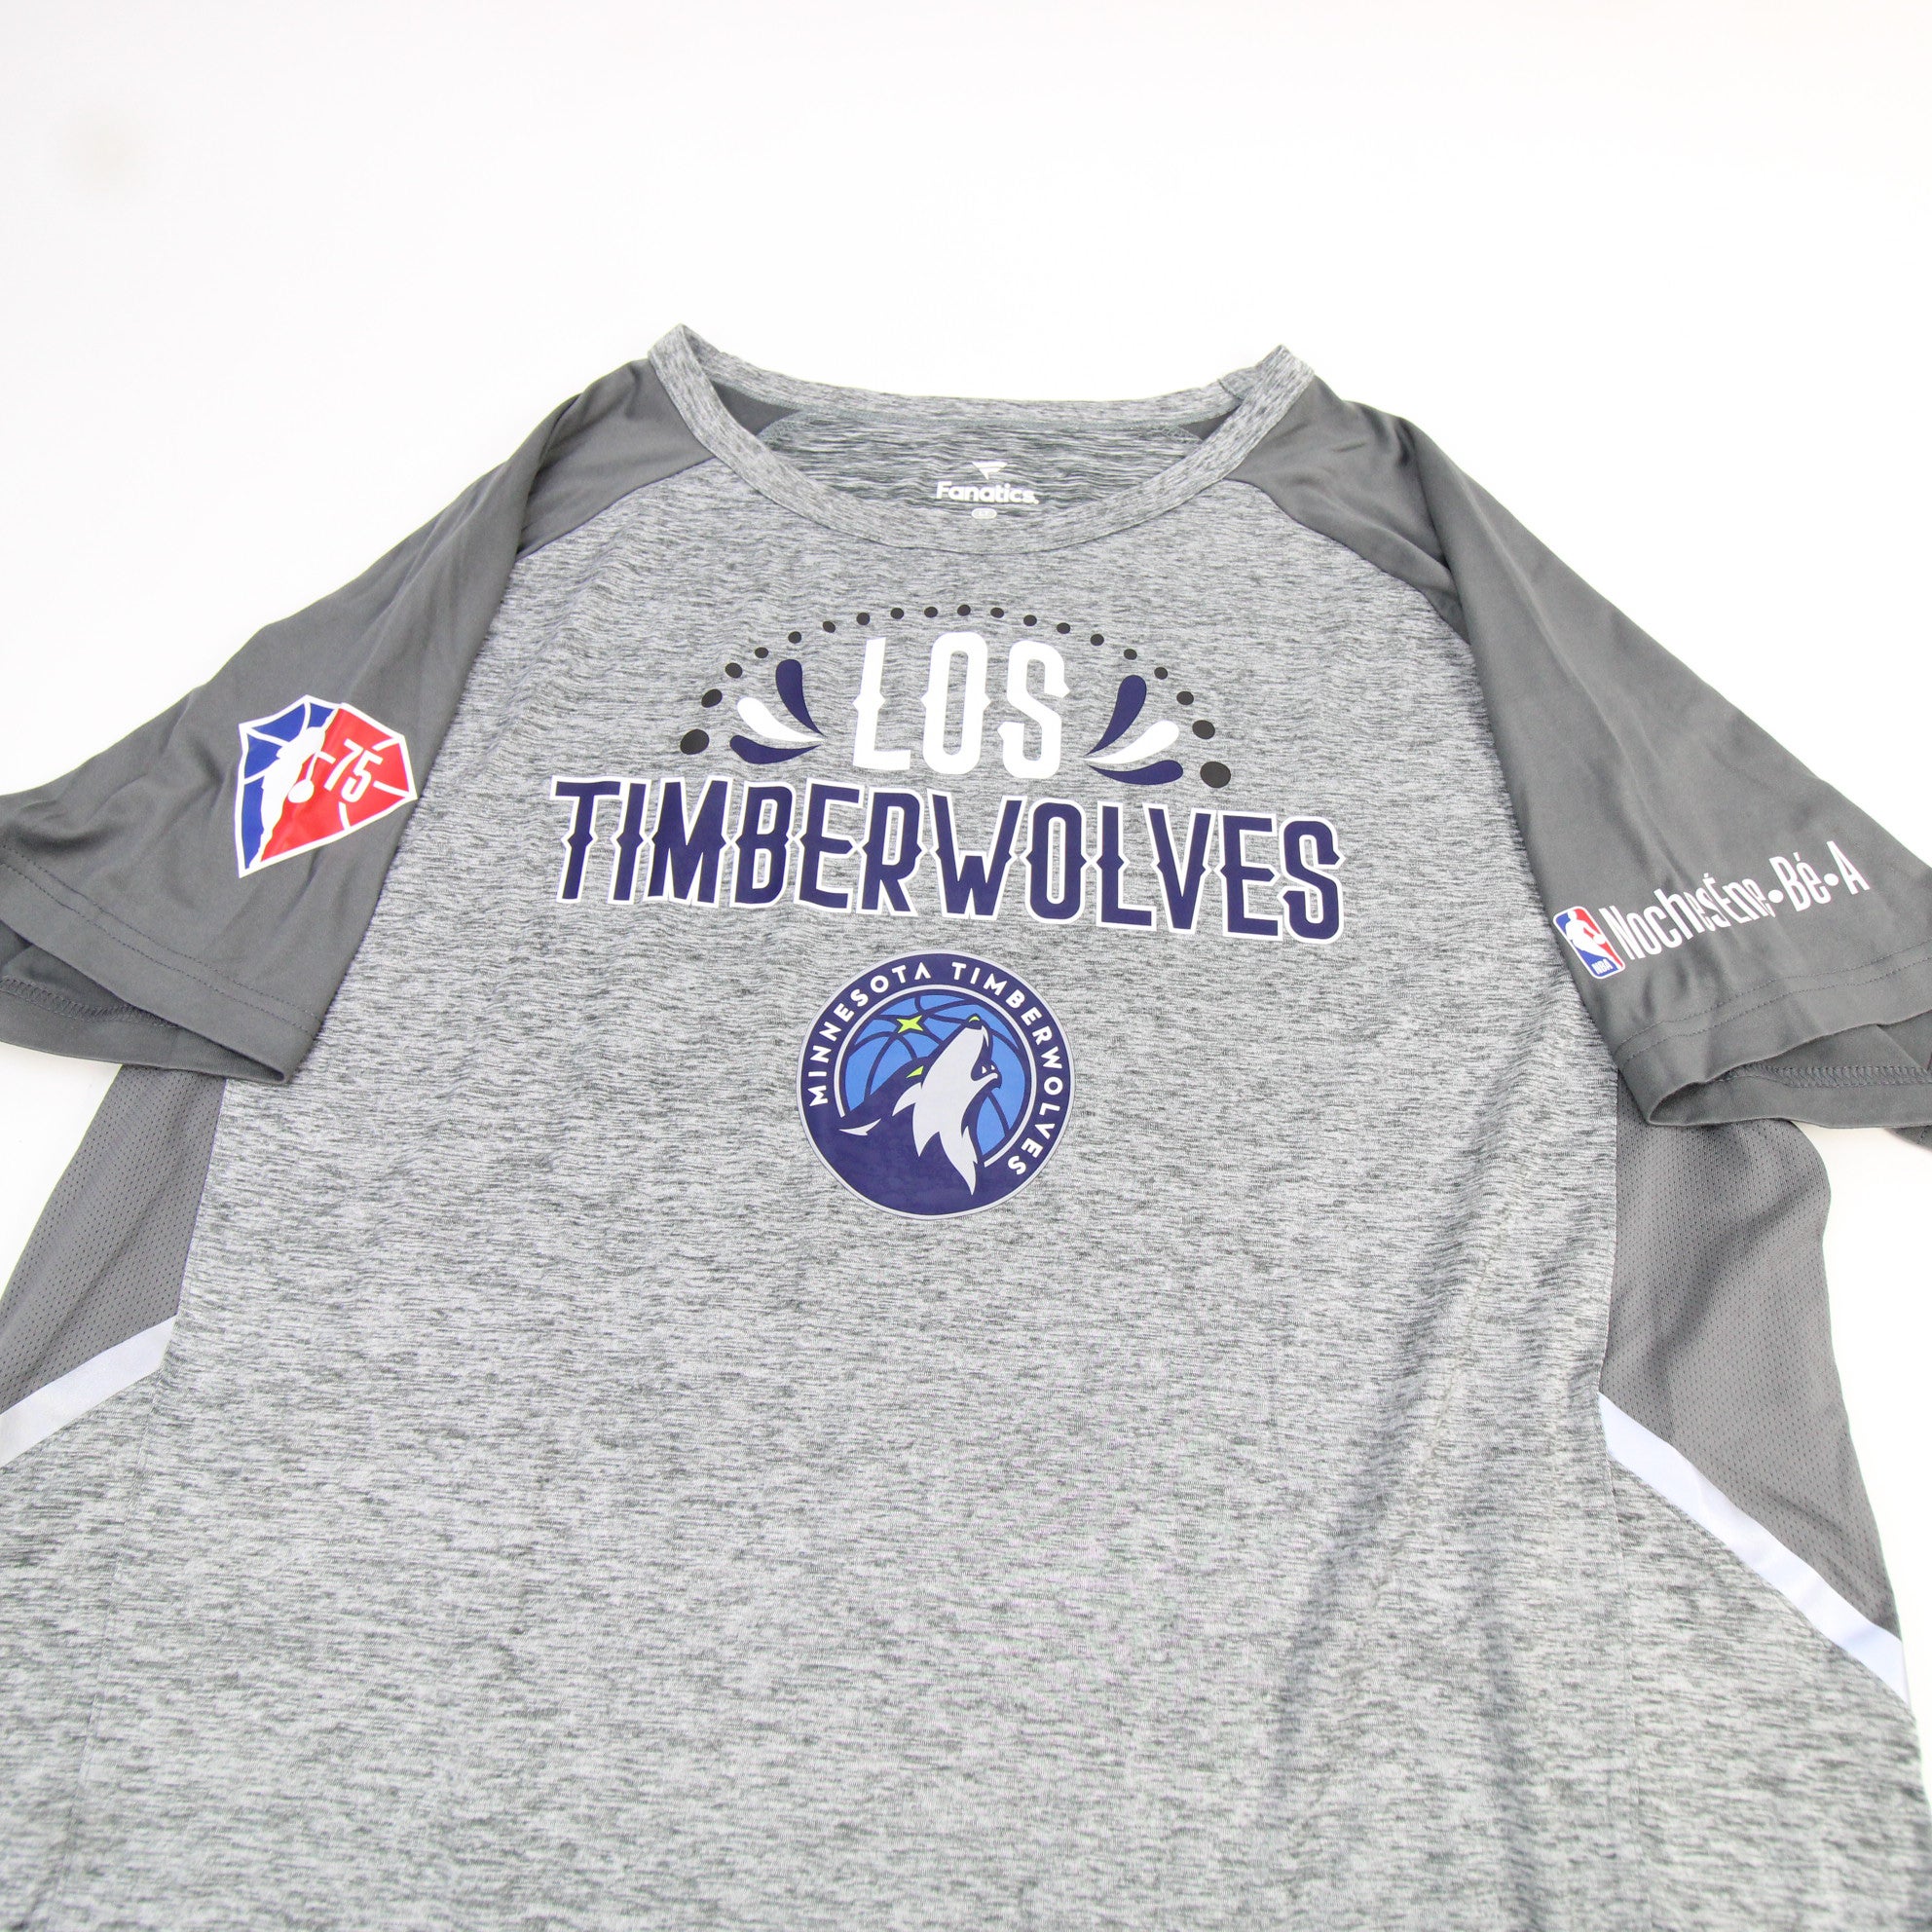 timberwolves grey jersey